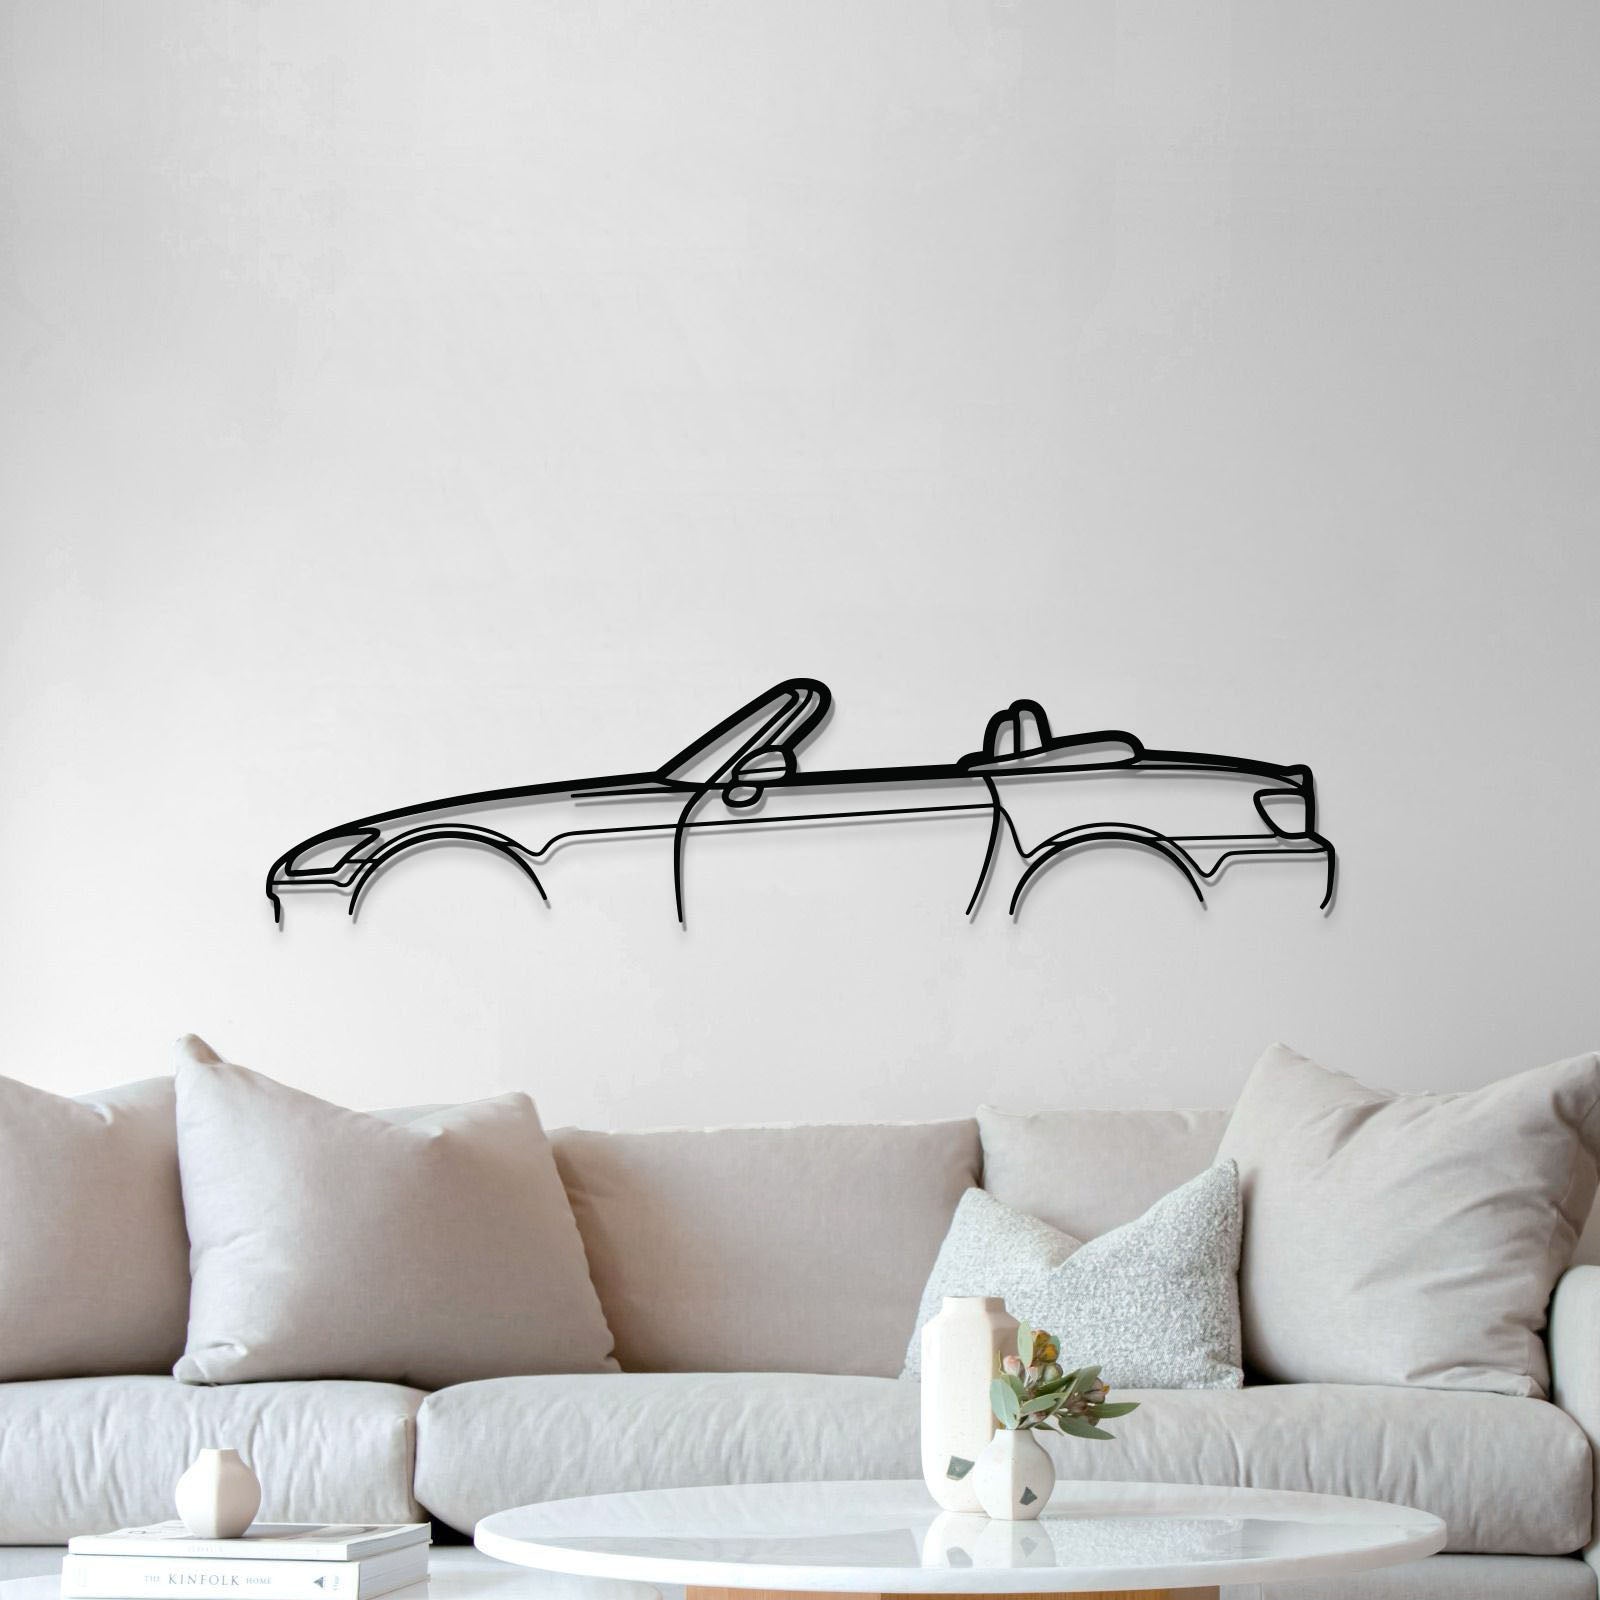 S2000 Metal Car Wall Art - MT1083